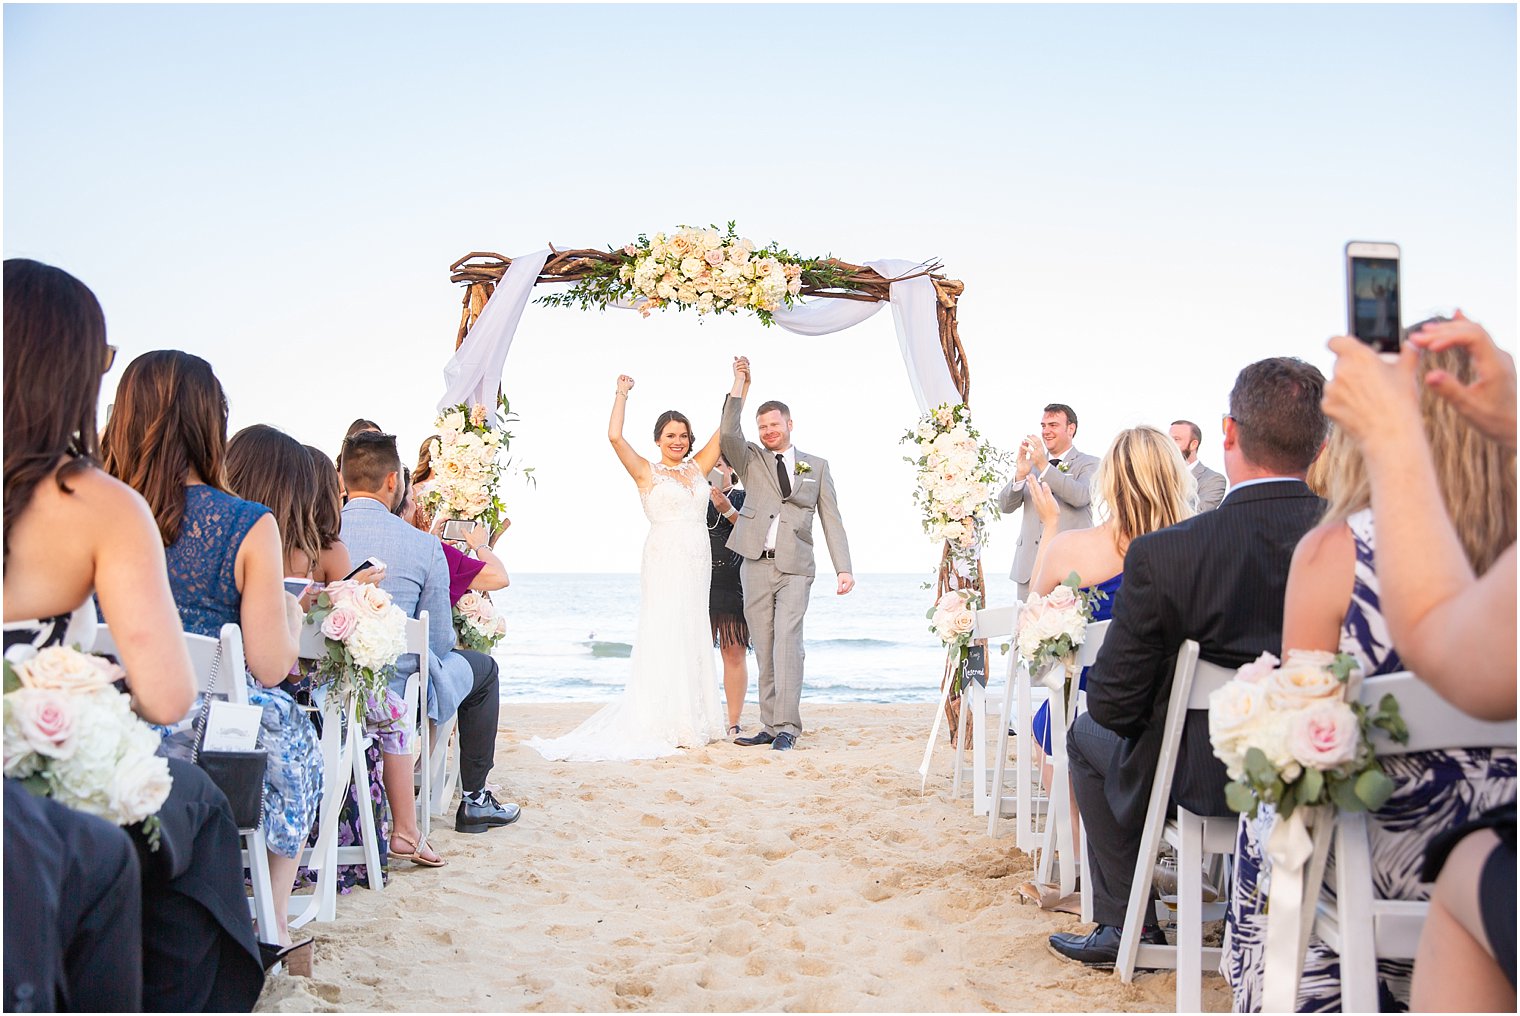 bride and groom celebrate wedding at beachfront wedding ceremony photographed by Idalia Photography